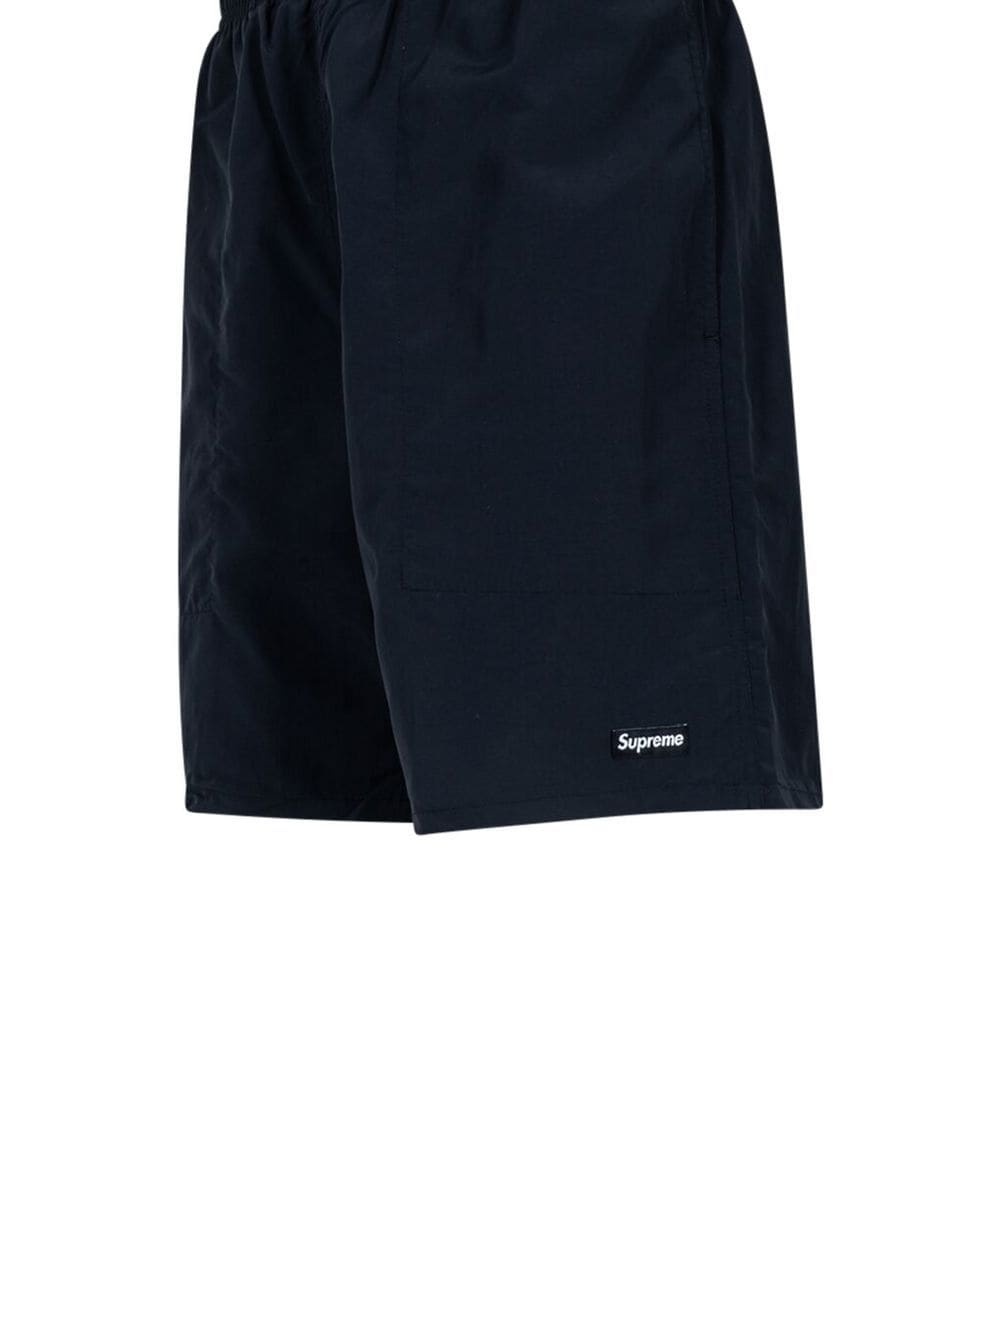 nylon water shorts - 3